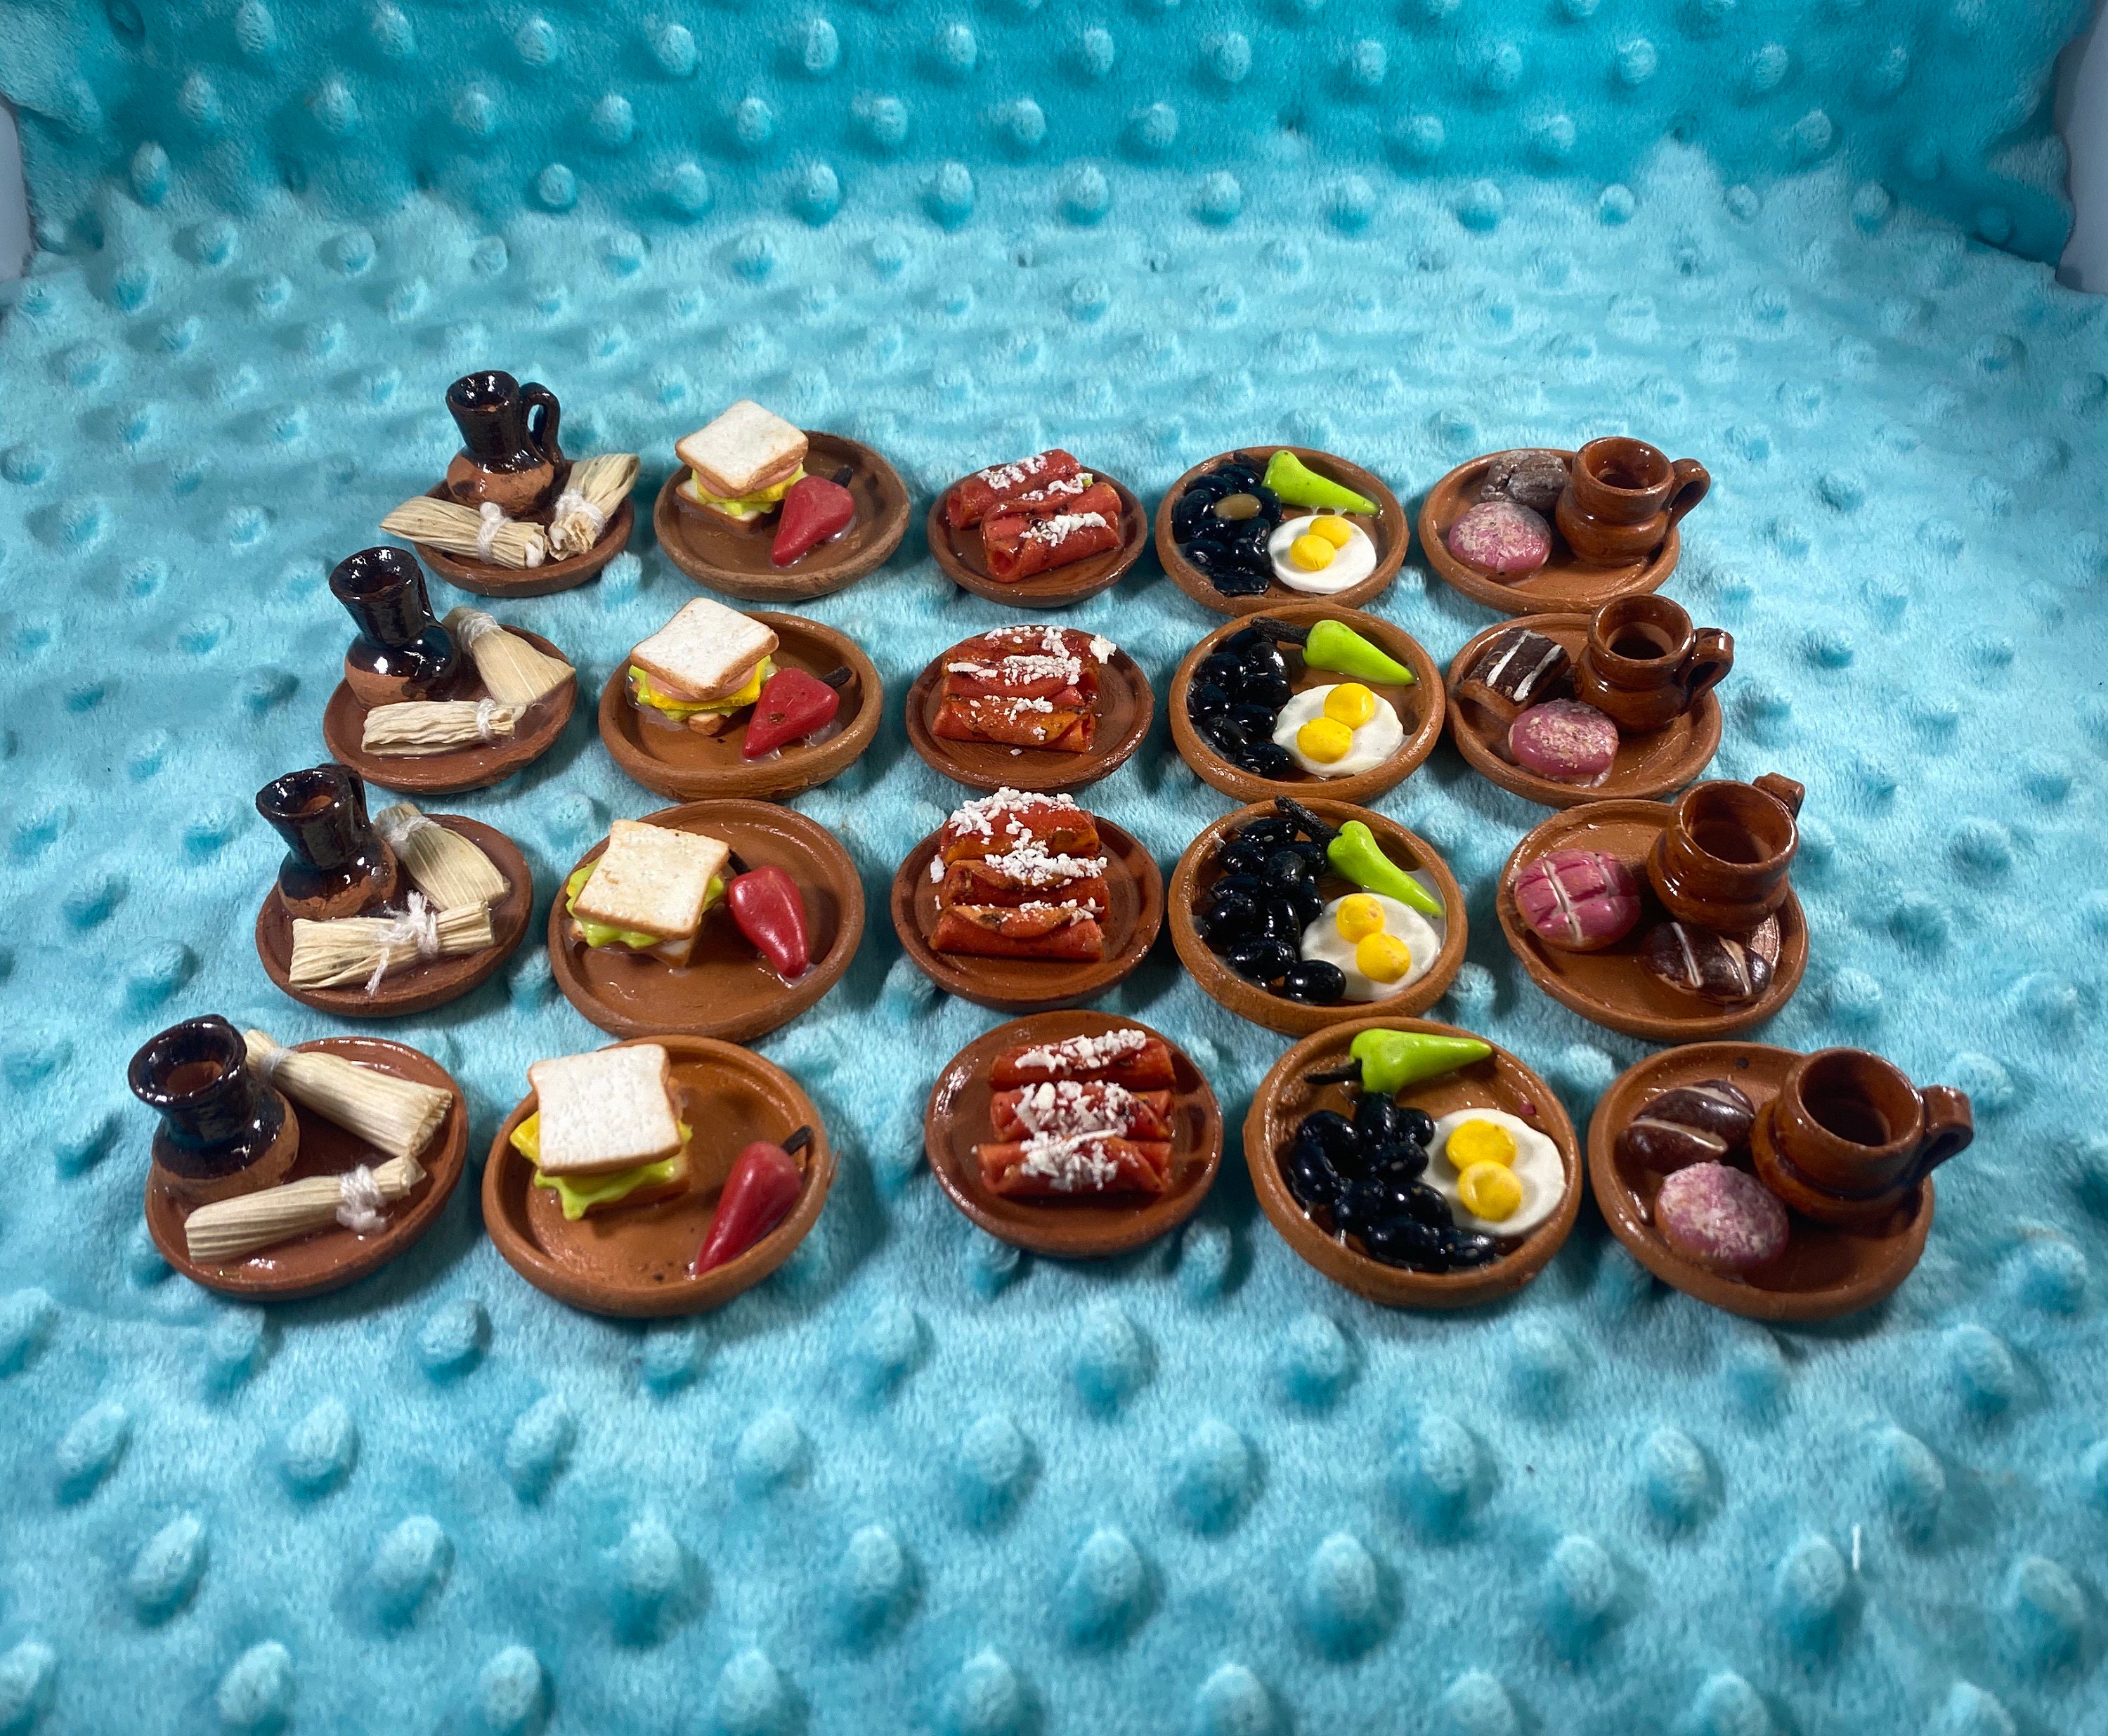 Heiheiup Play Diy Tool Mini Miniature Food Toy Accessories